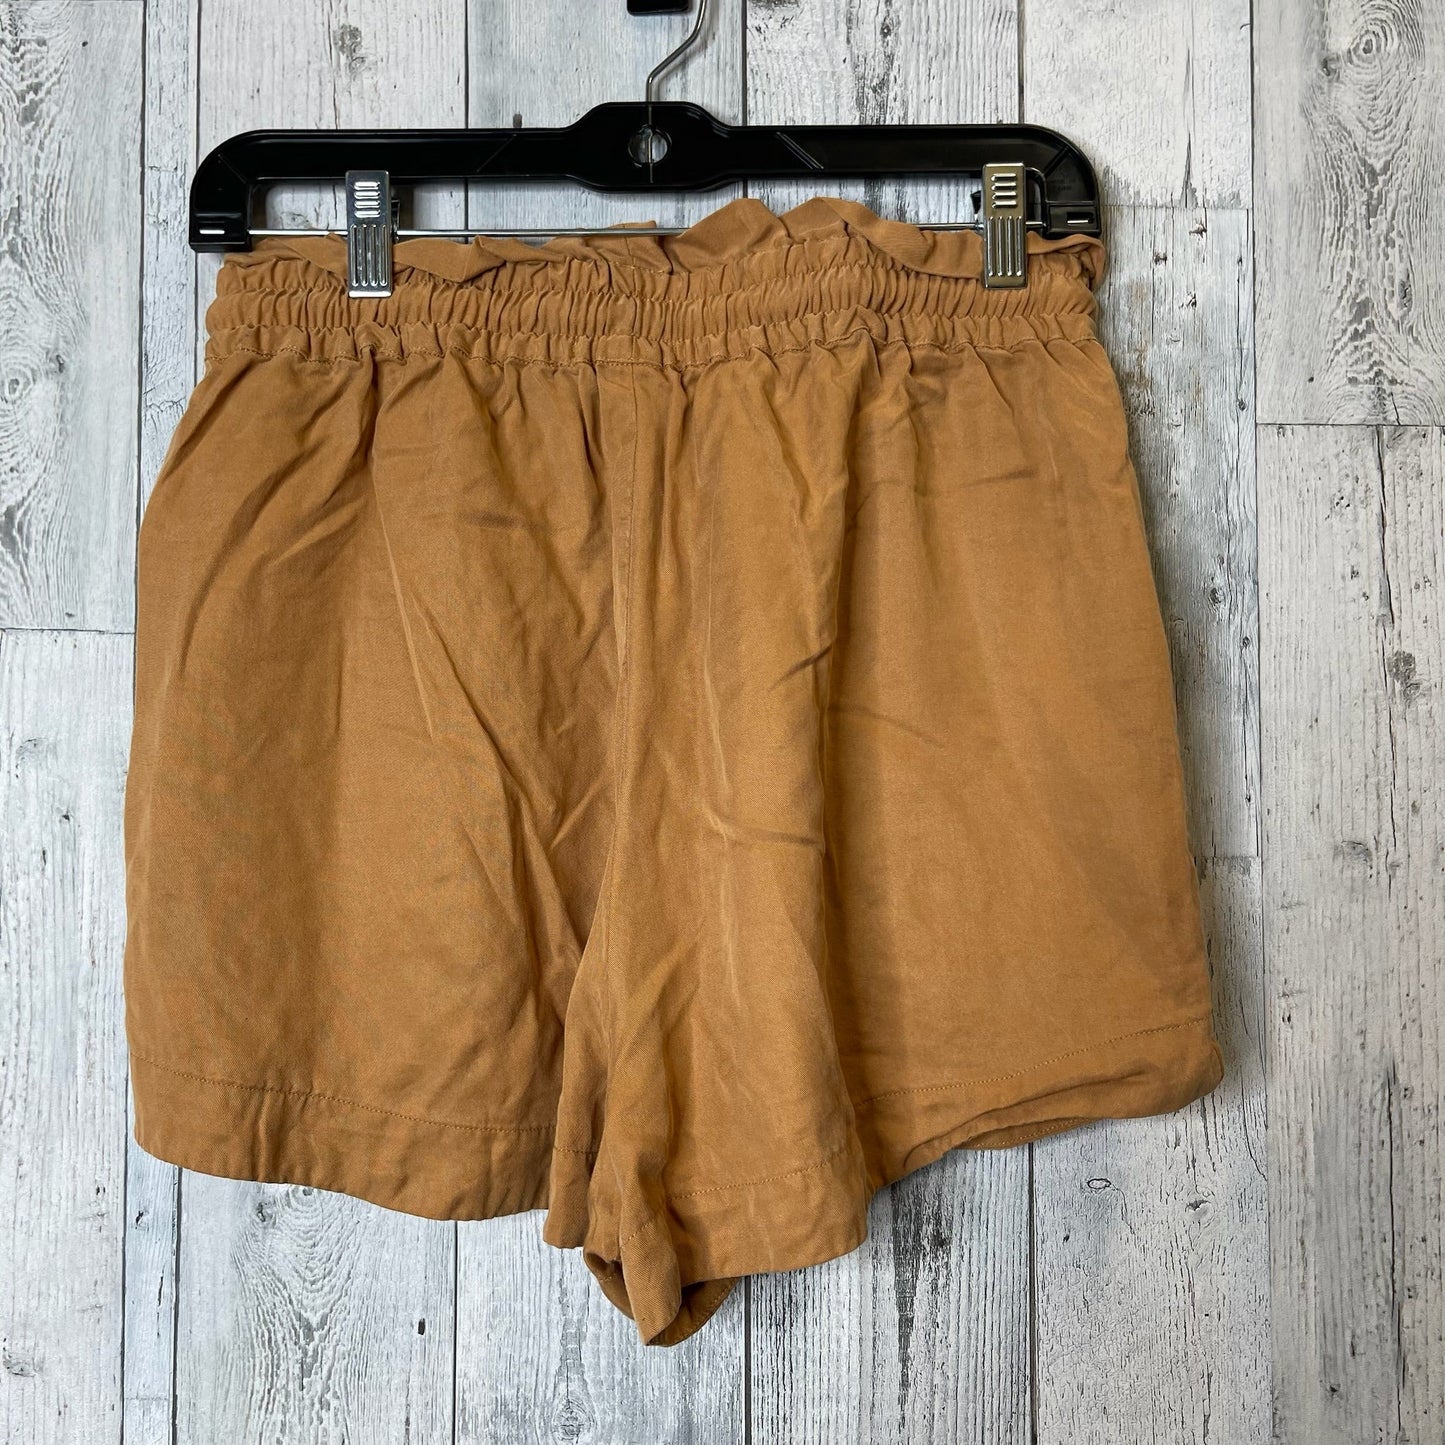 Shorts By Society Amuse  Size: S